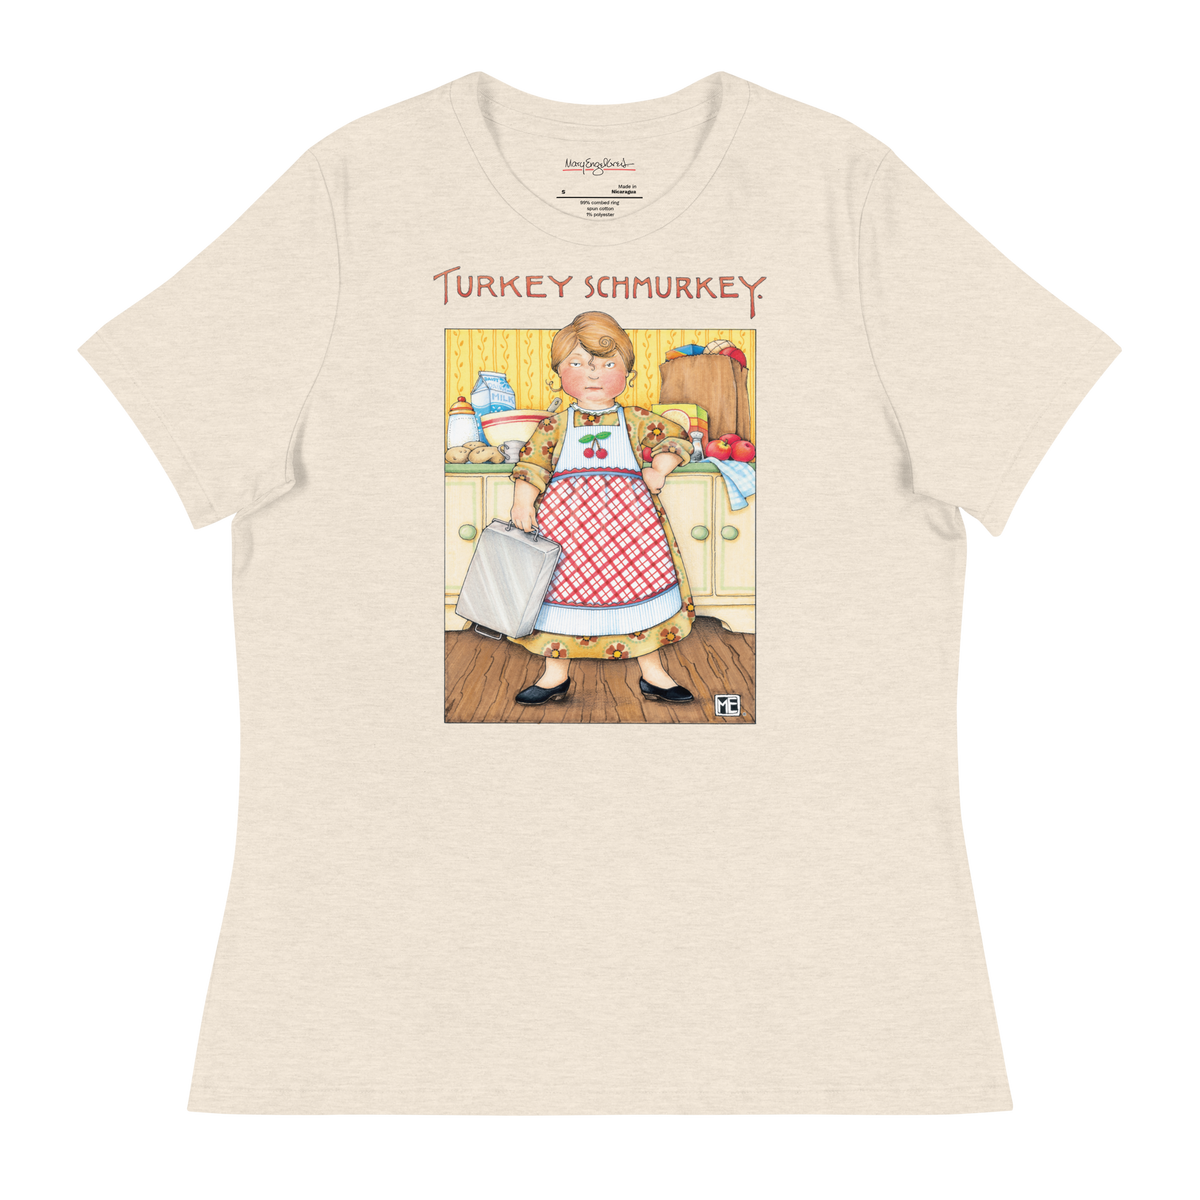 Turkey Schmurkey Women's T-Shirt